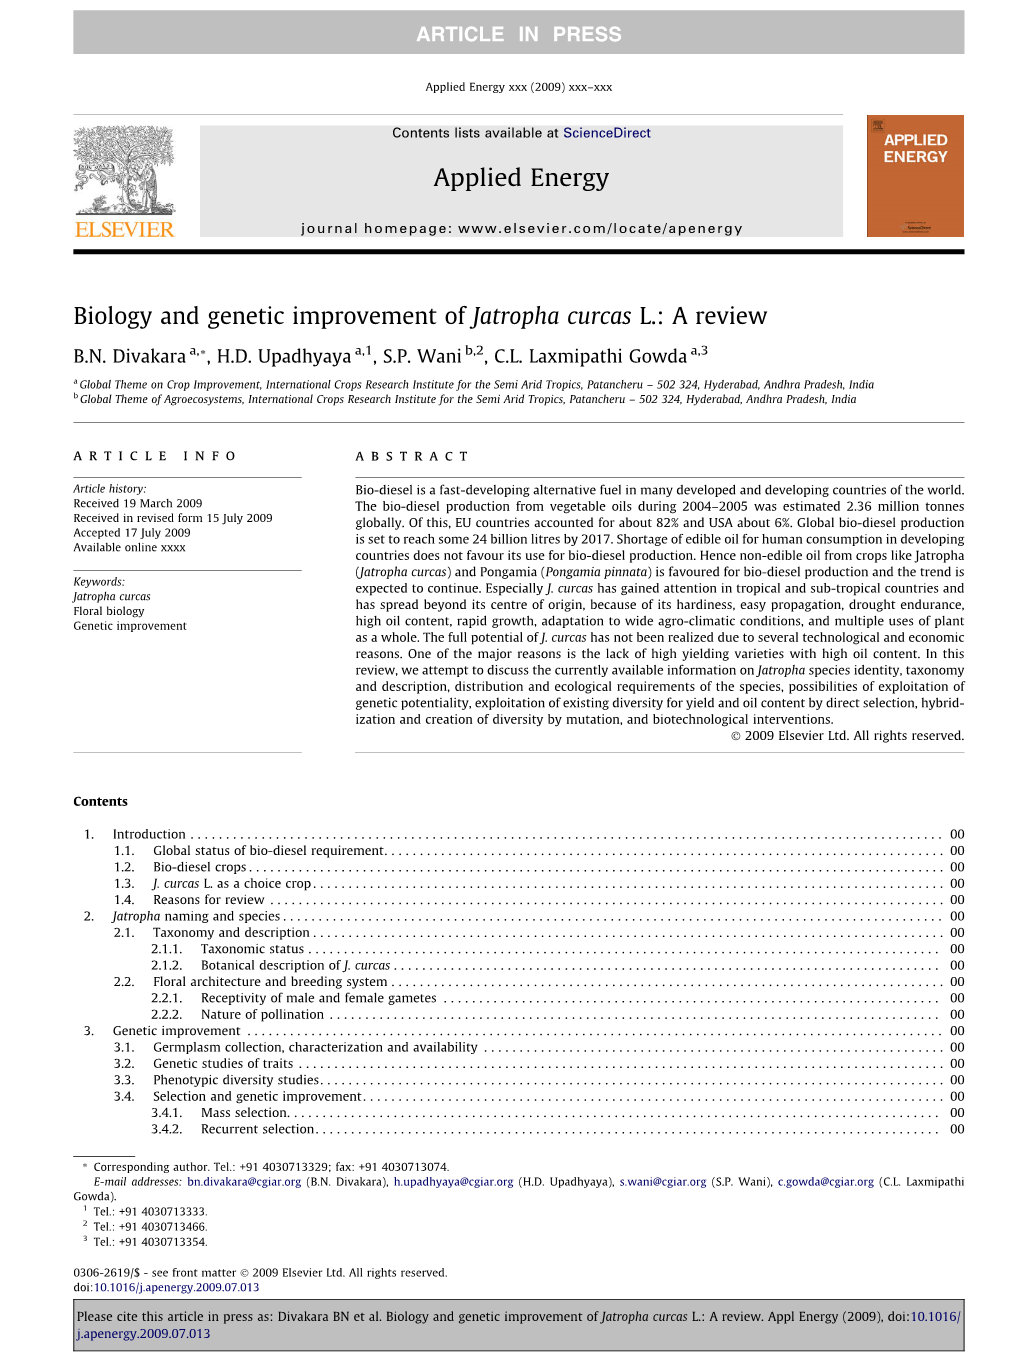 Biology and Genetic Improvement of Jatropha Curcas L.: a Review